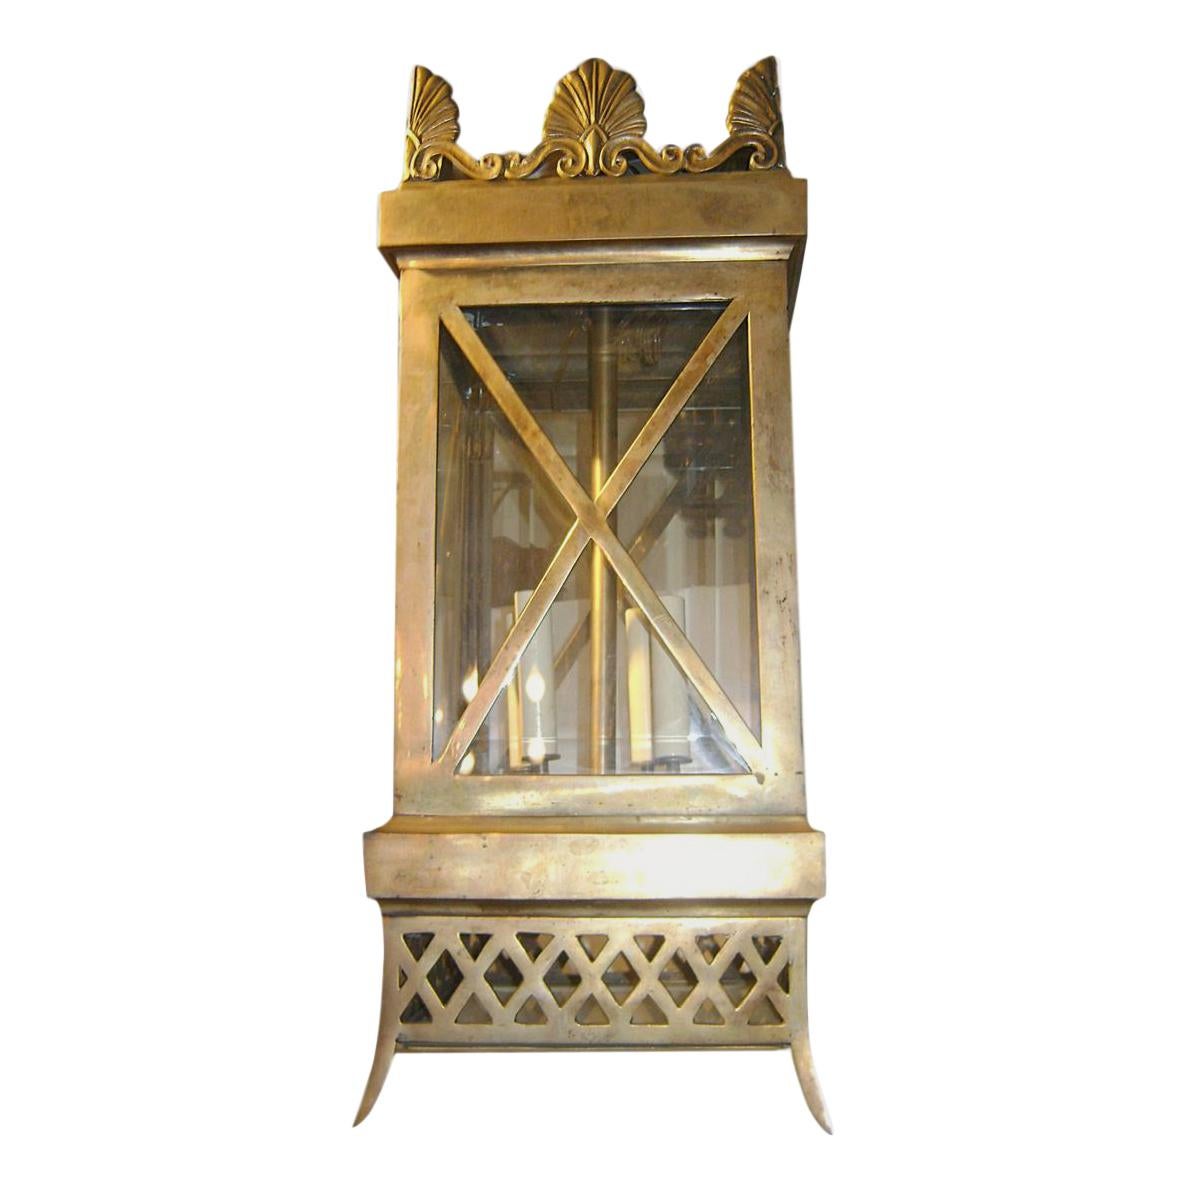 A Large Bronze English Lantern